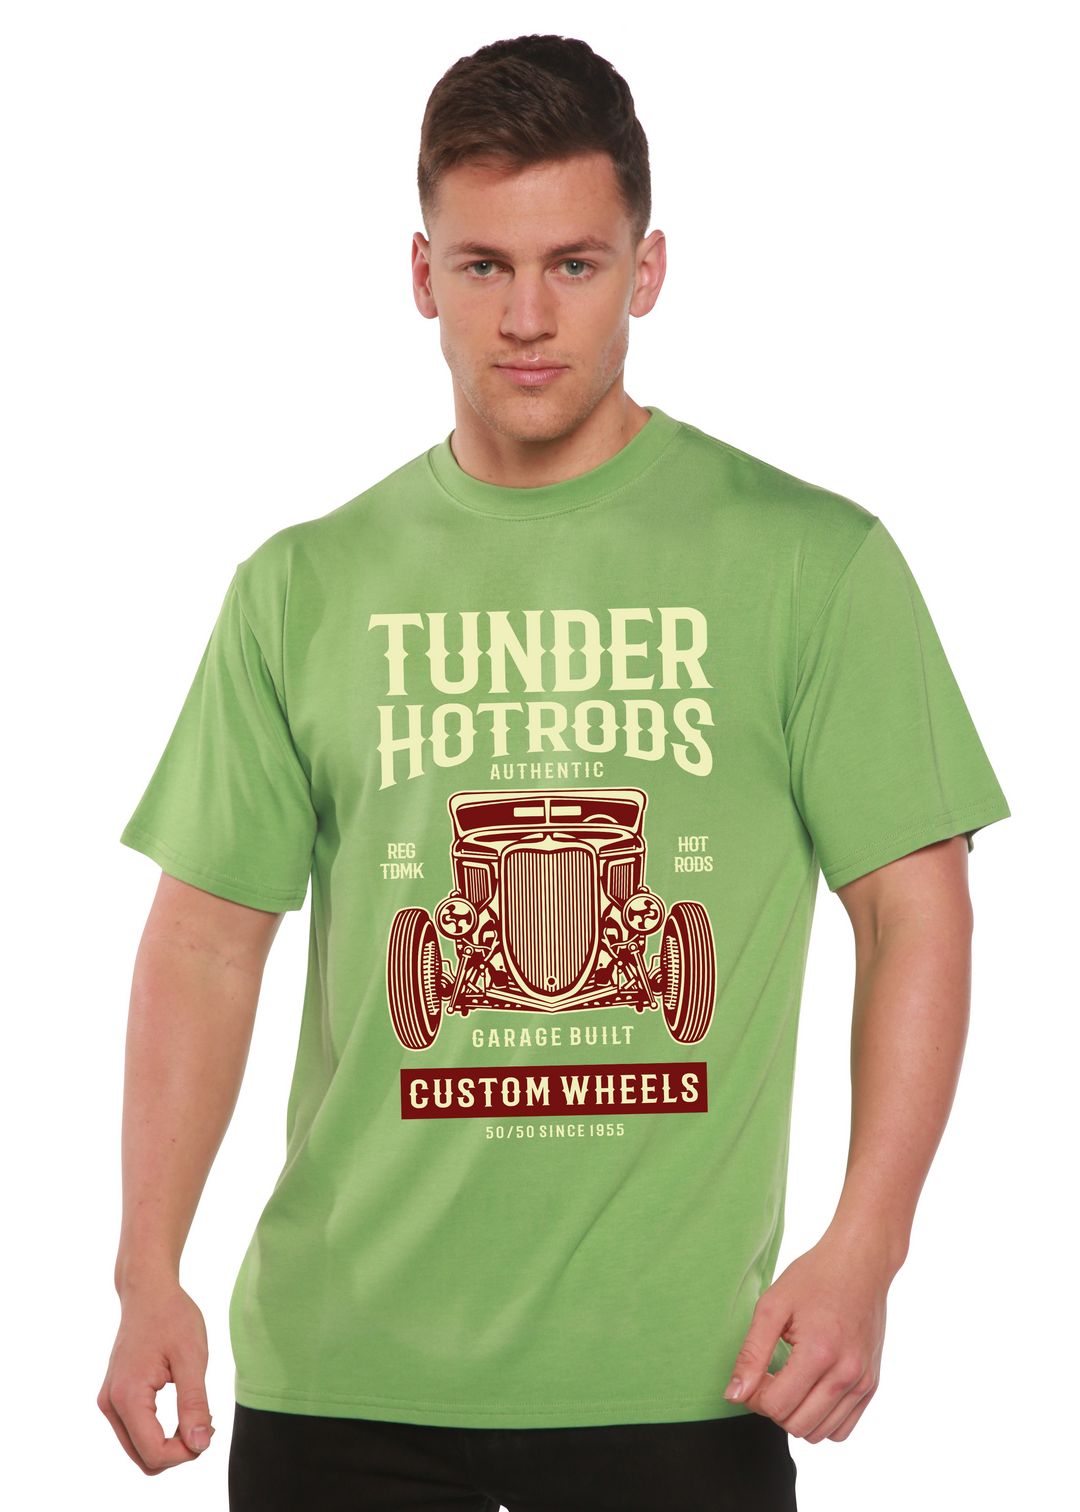 Thunder Hot men's bamboo tshirt green tea